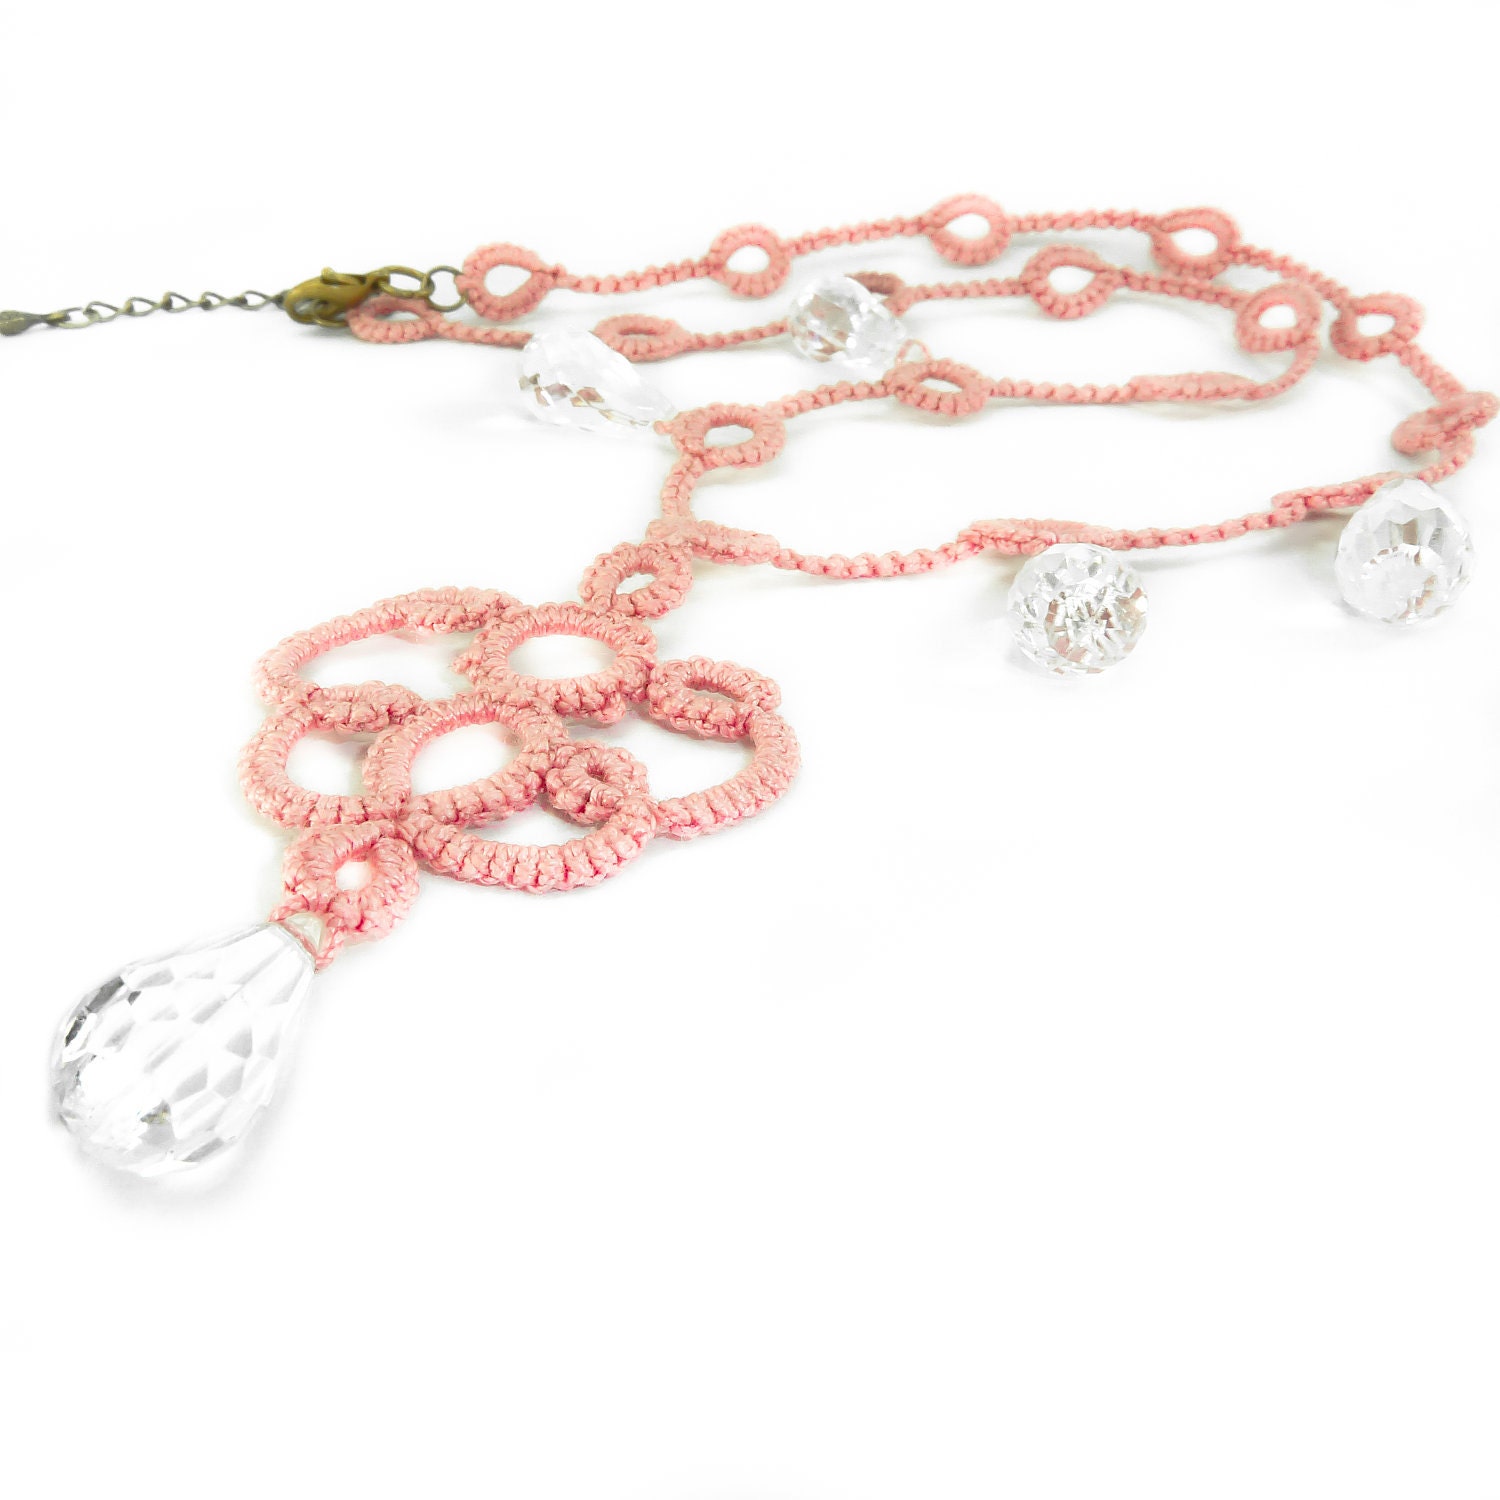 Braidsmaide pink lace necklace - Decoromana